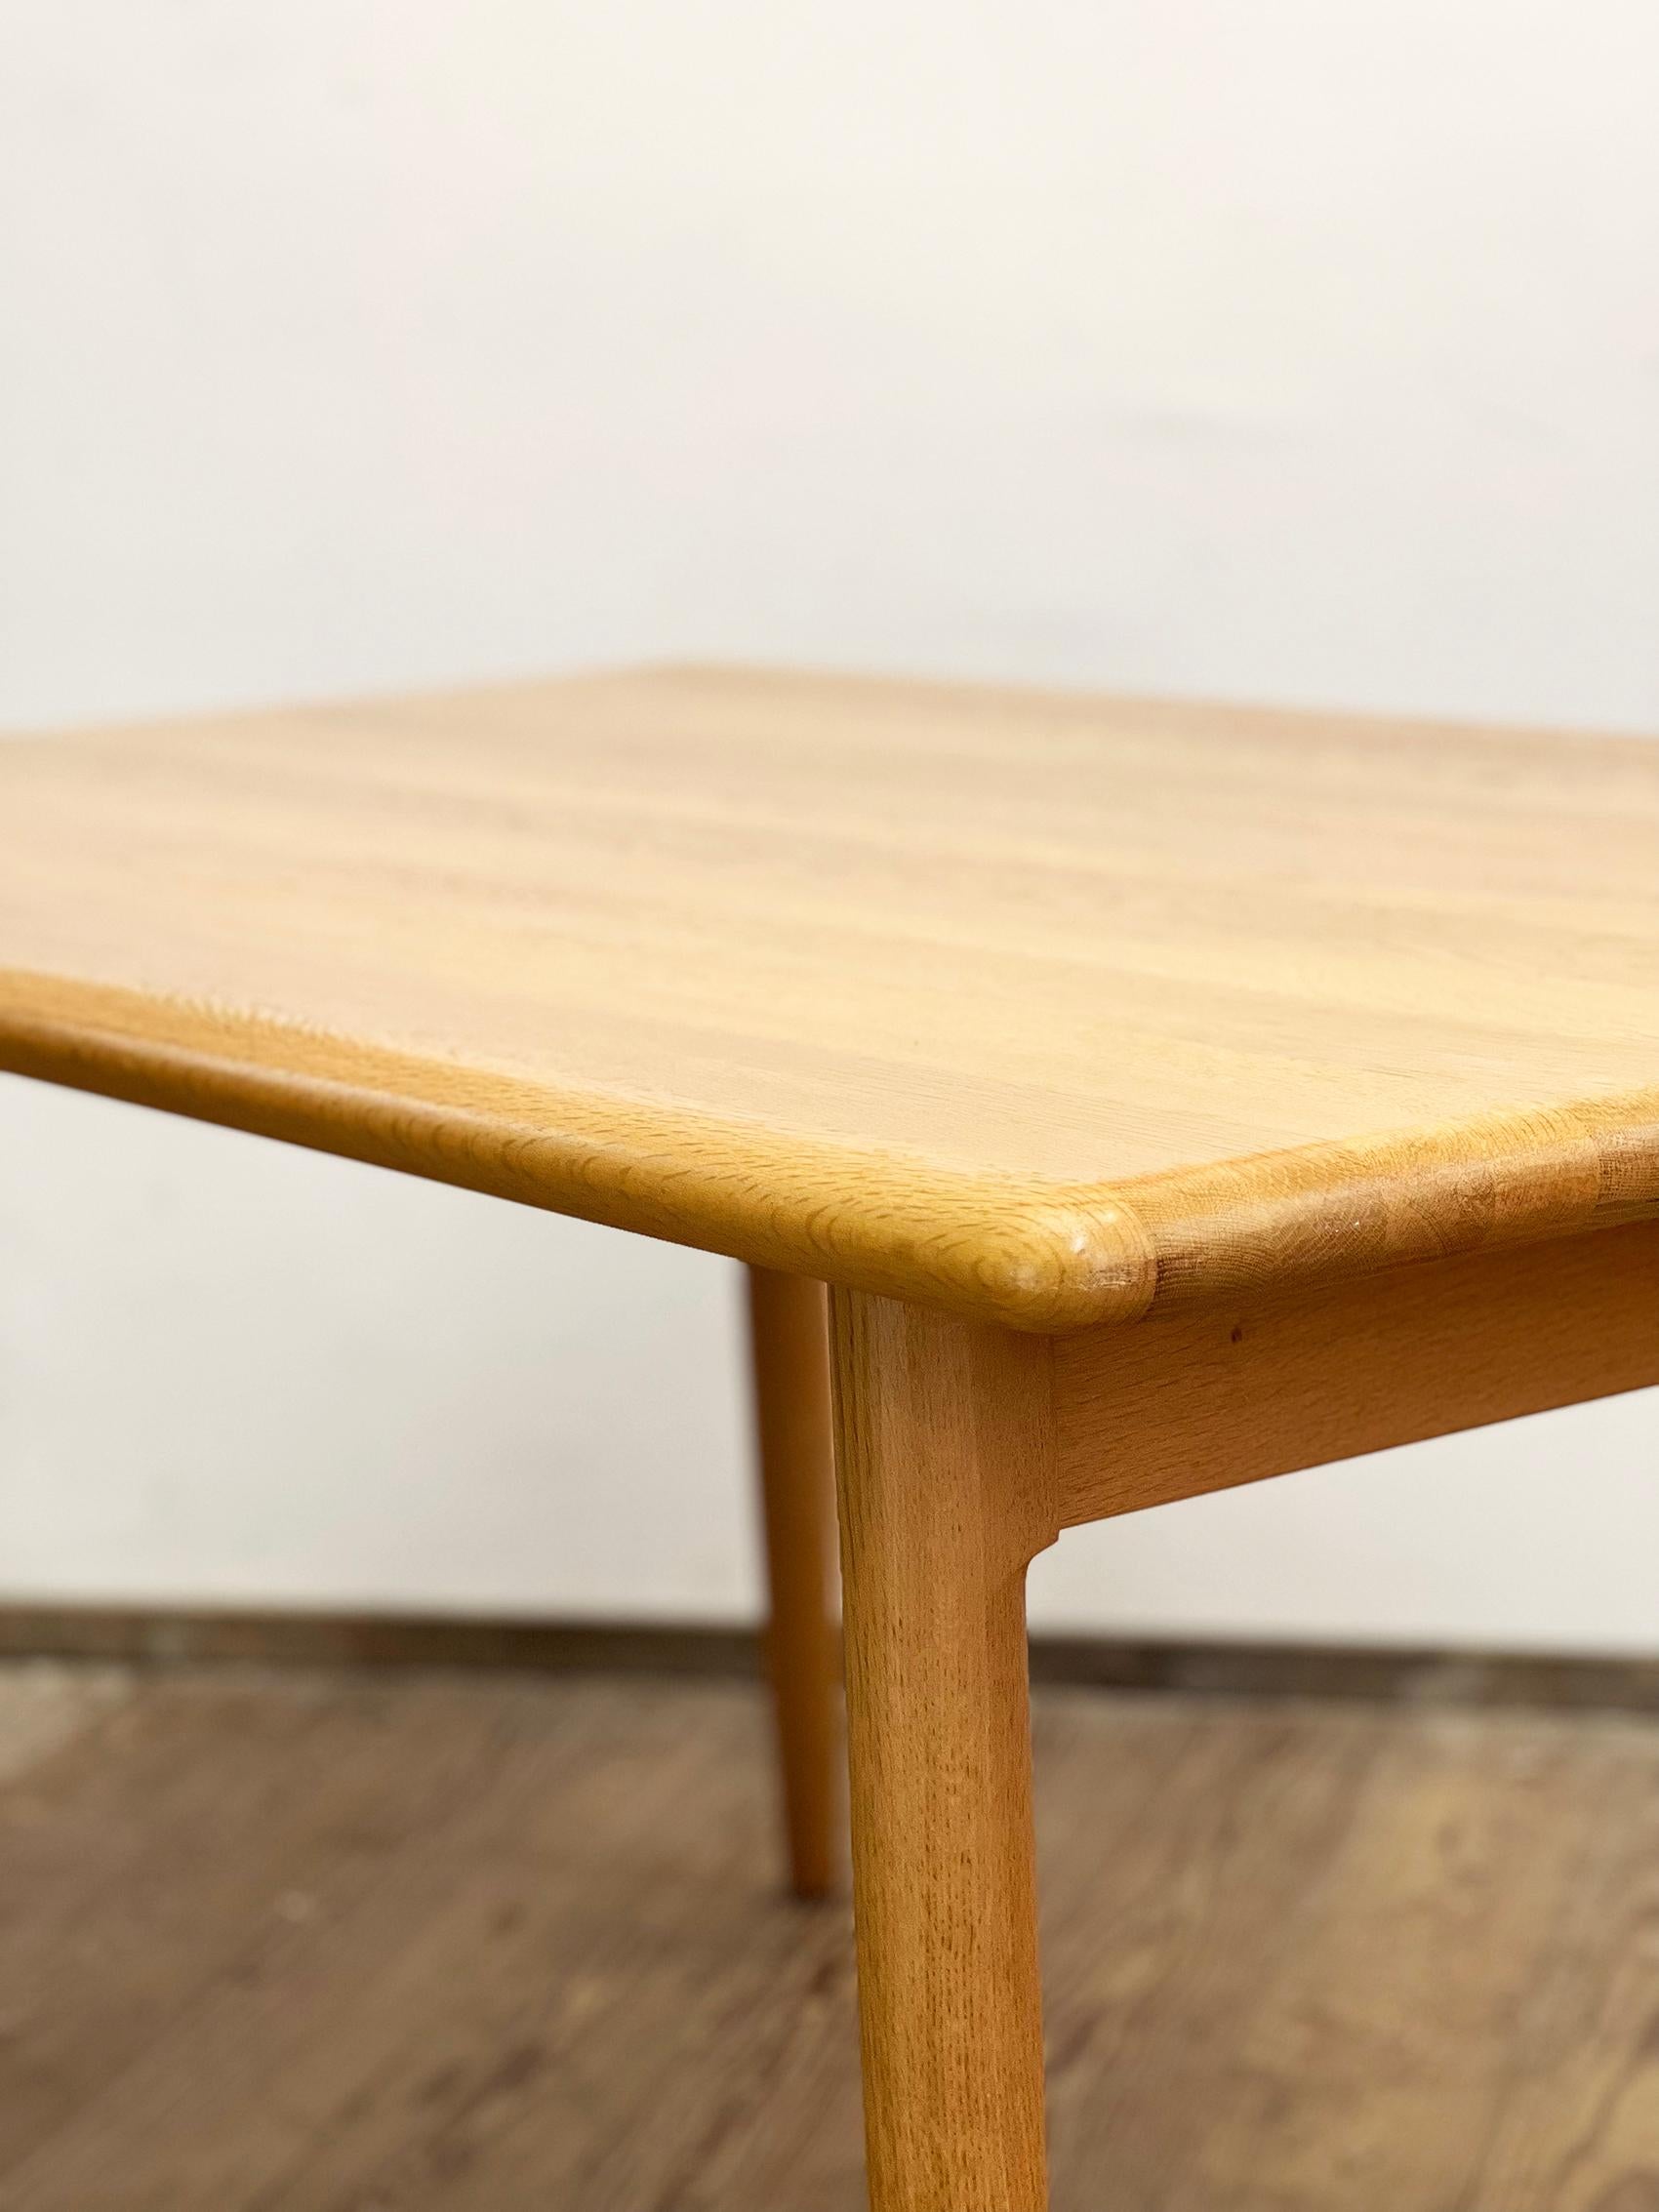 Mid-Century Dining Table, Danish Design out of massiv Oak Wood, Denmark, 1960s For Sale 5